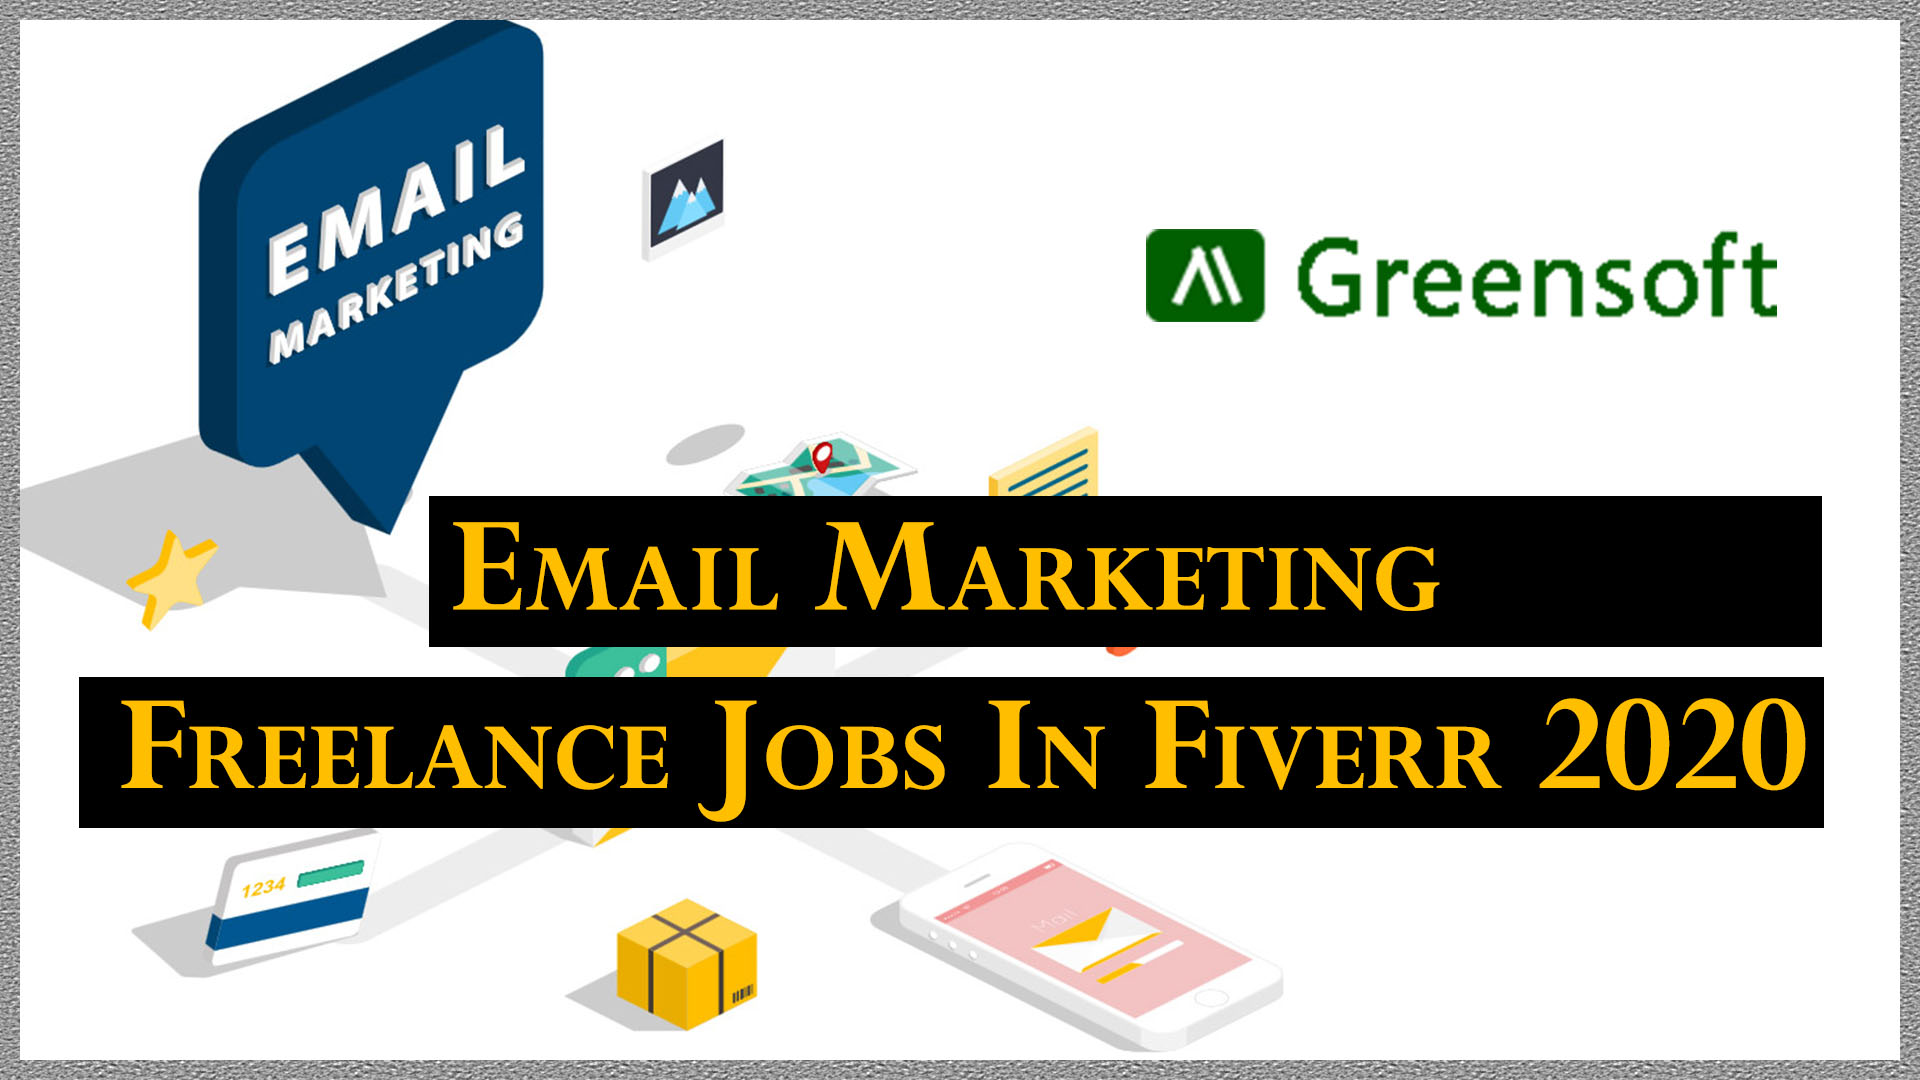 Email Marketing freelancing jobs in fiverr, greensoftdhaka.com